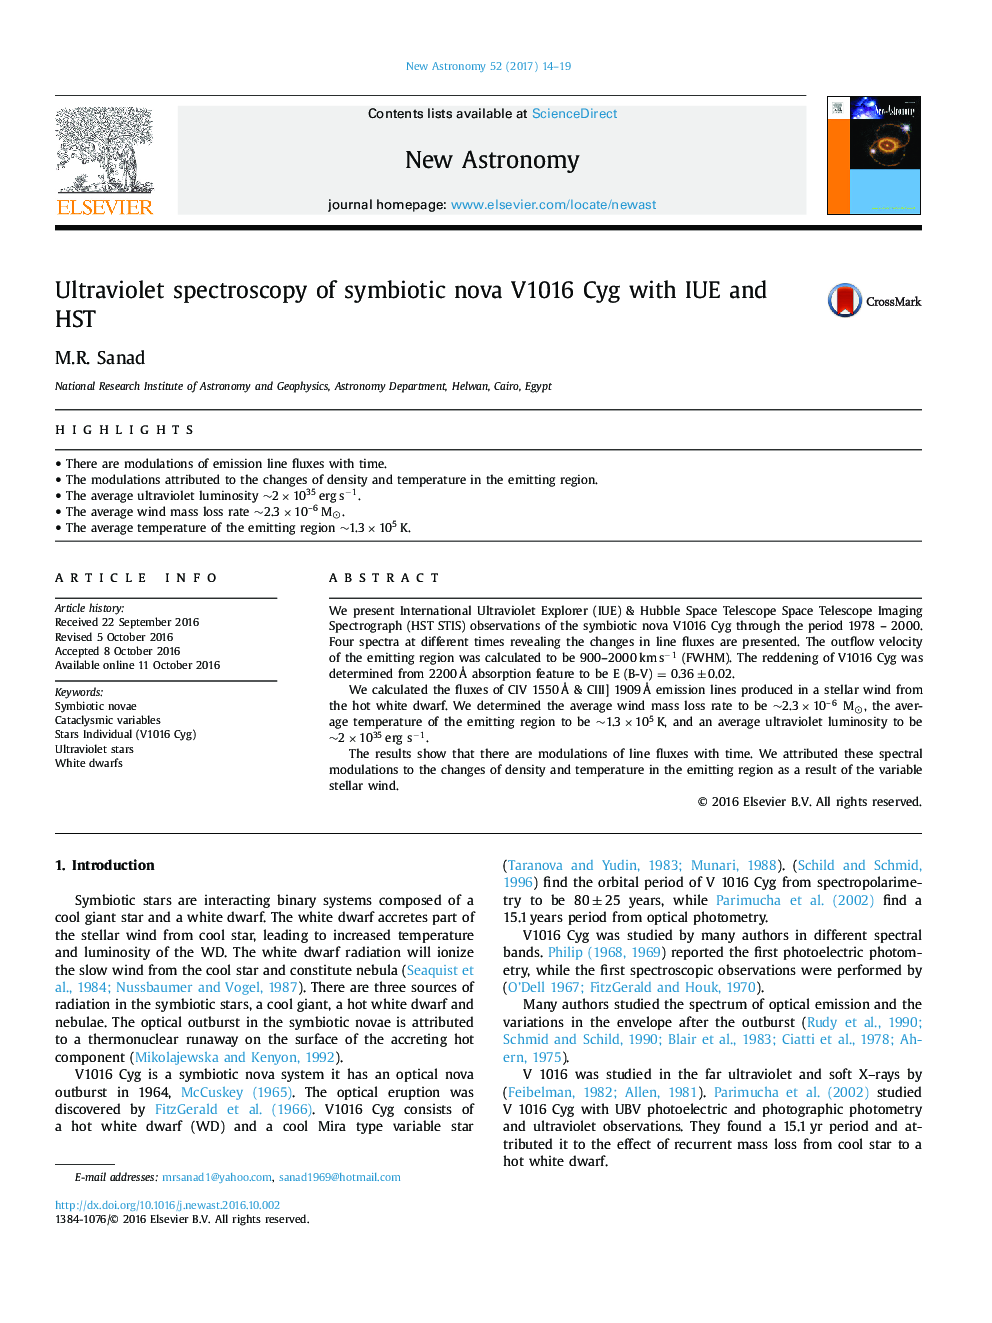 Ultraviolet spectroscopy of symbiotic nova V1016 Cyg with IUE and HST